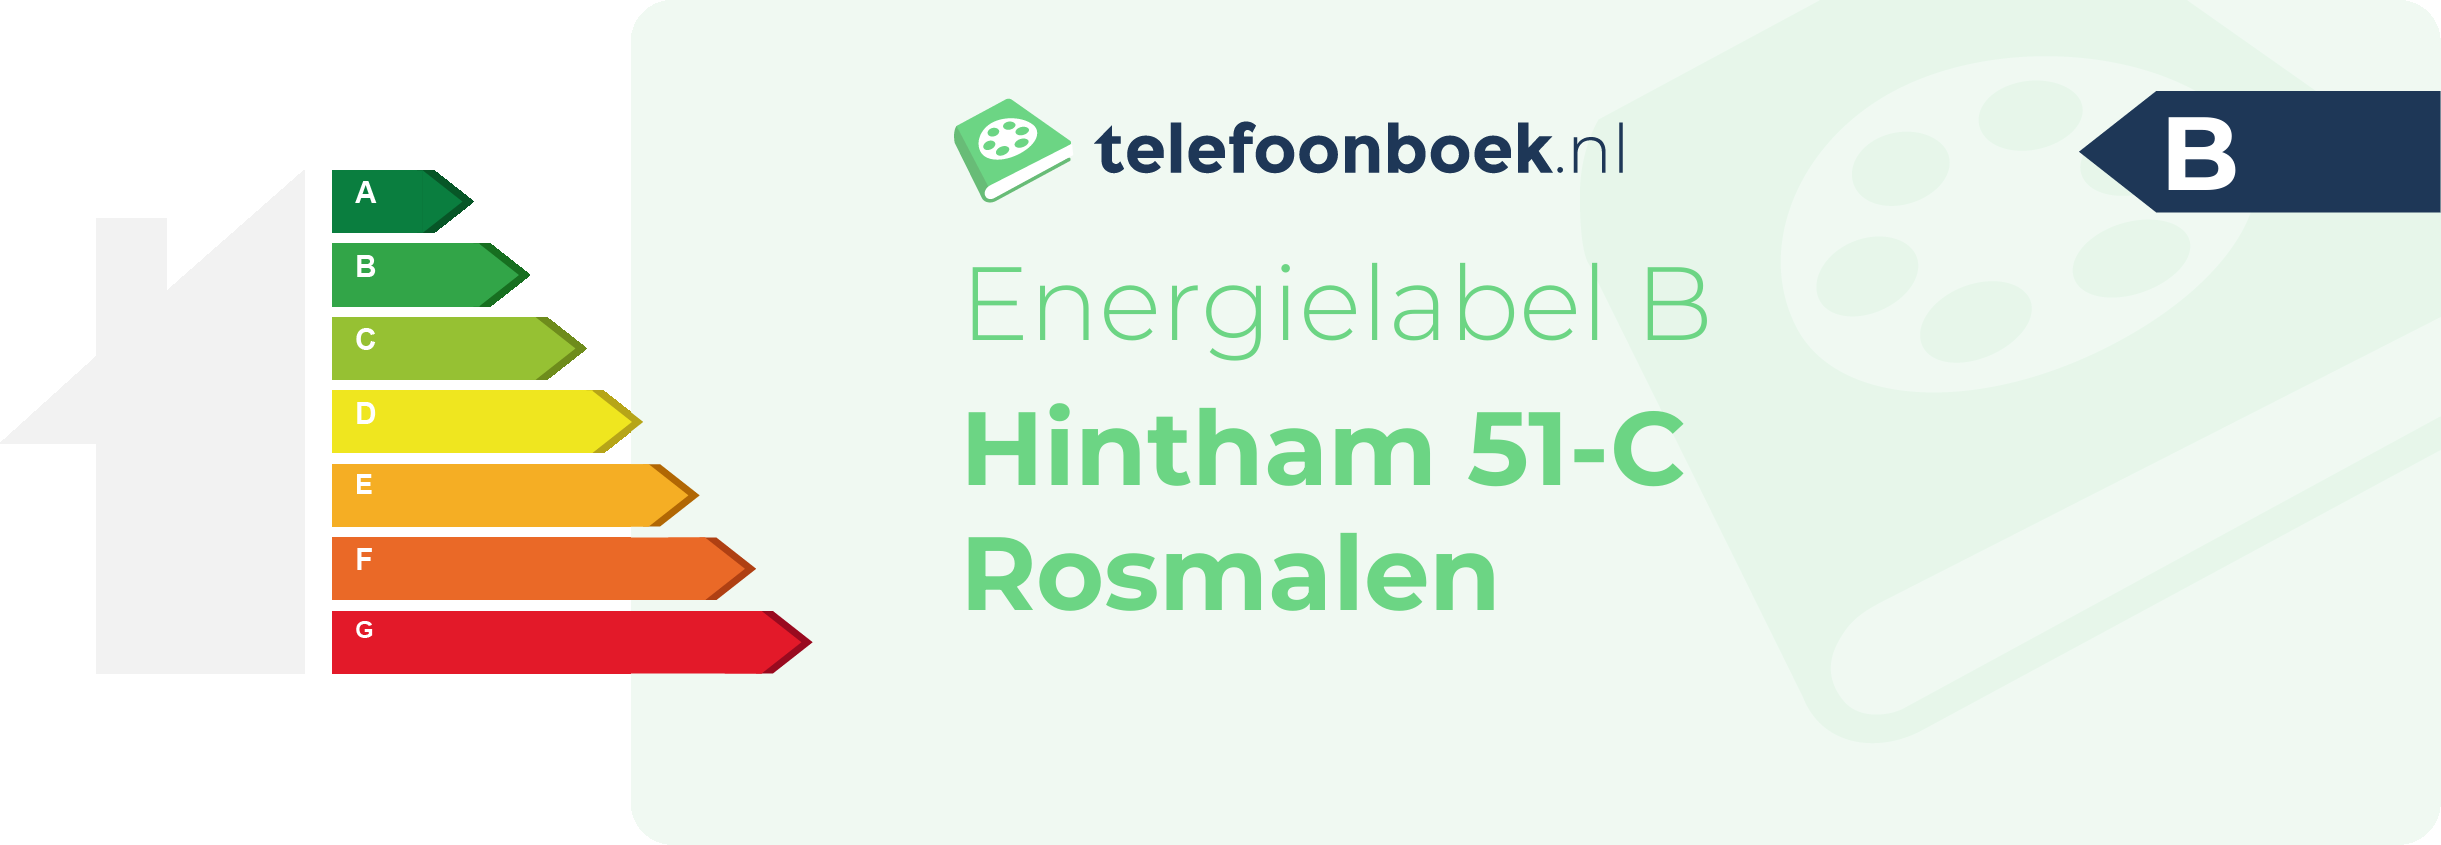 Energielabel Hintham 51-C Rosmalen